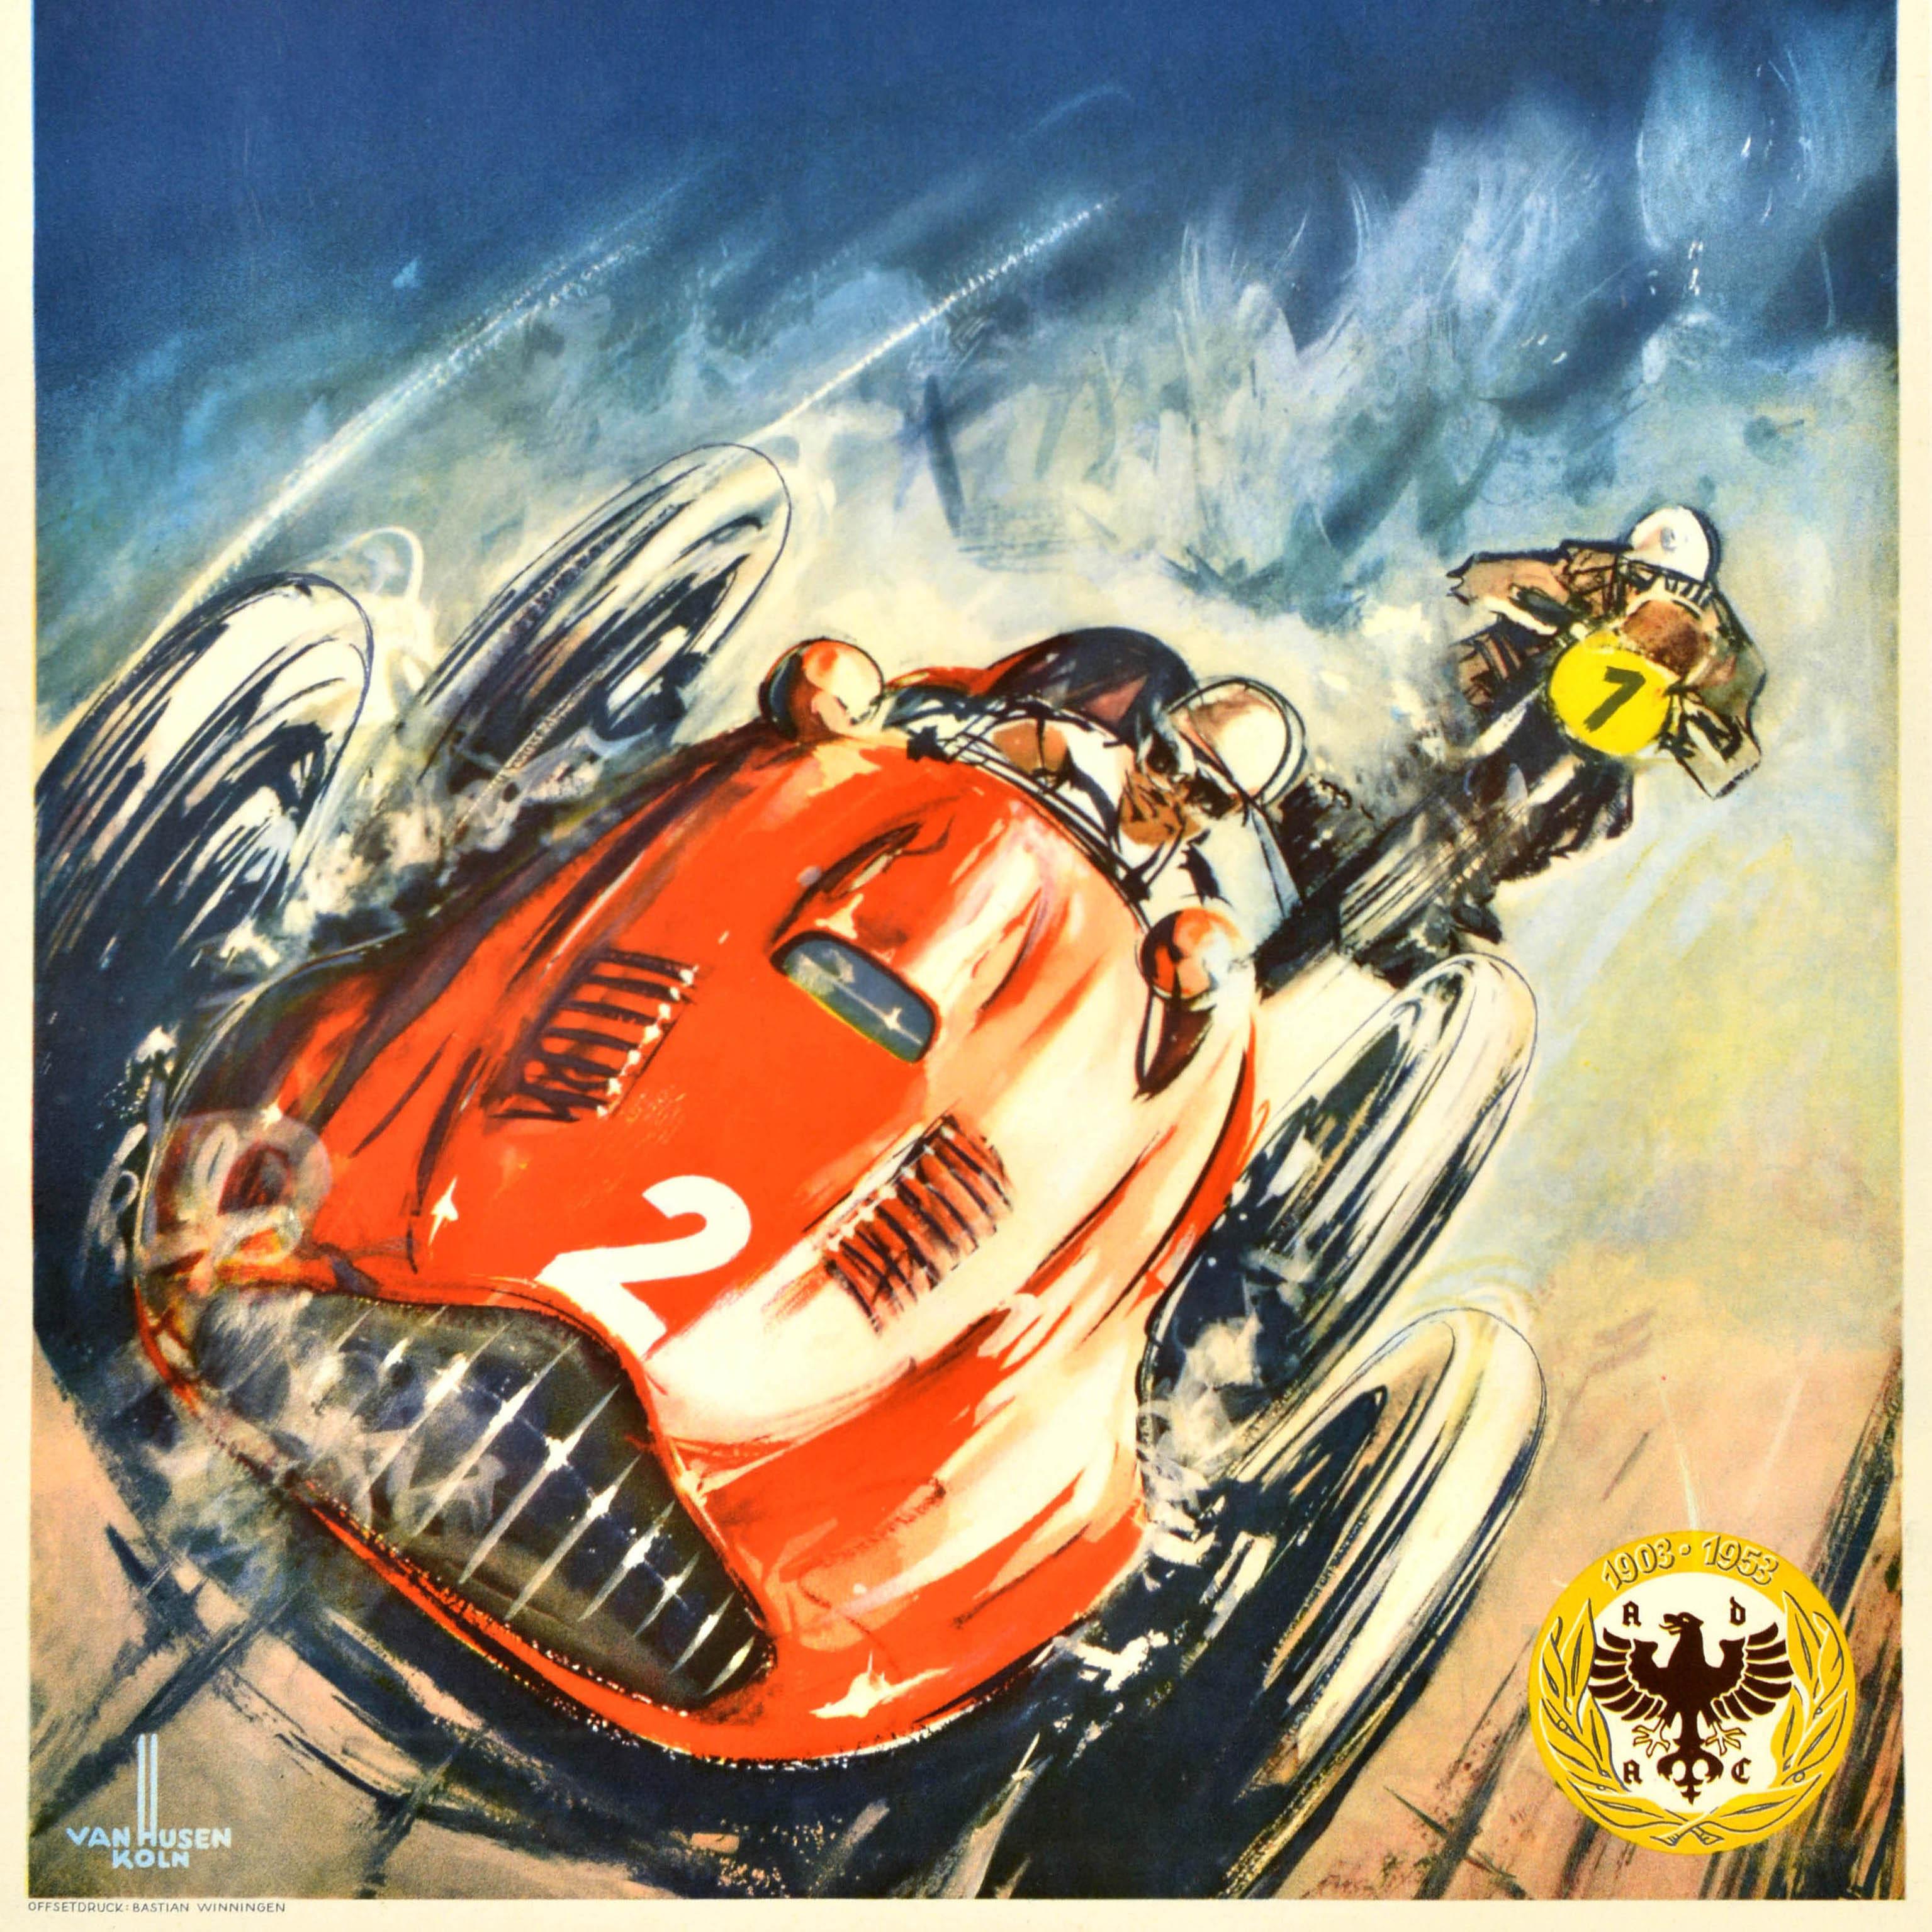 Original Vintage Motorsport Poster XIX International ADAC Eifel Race Nurburgring For Sale 1